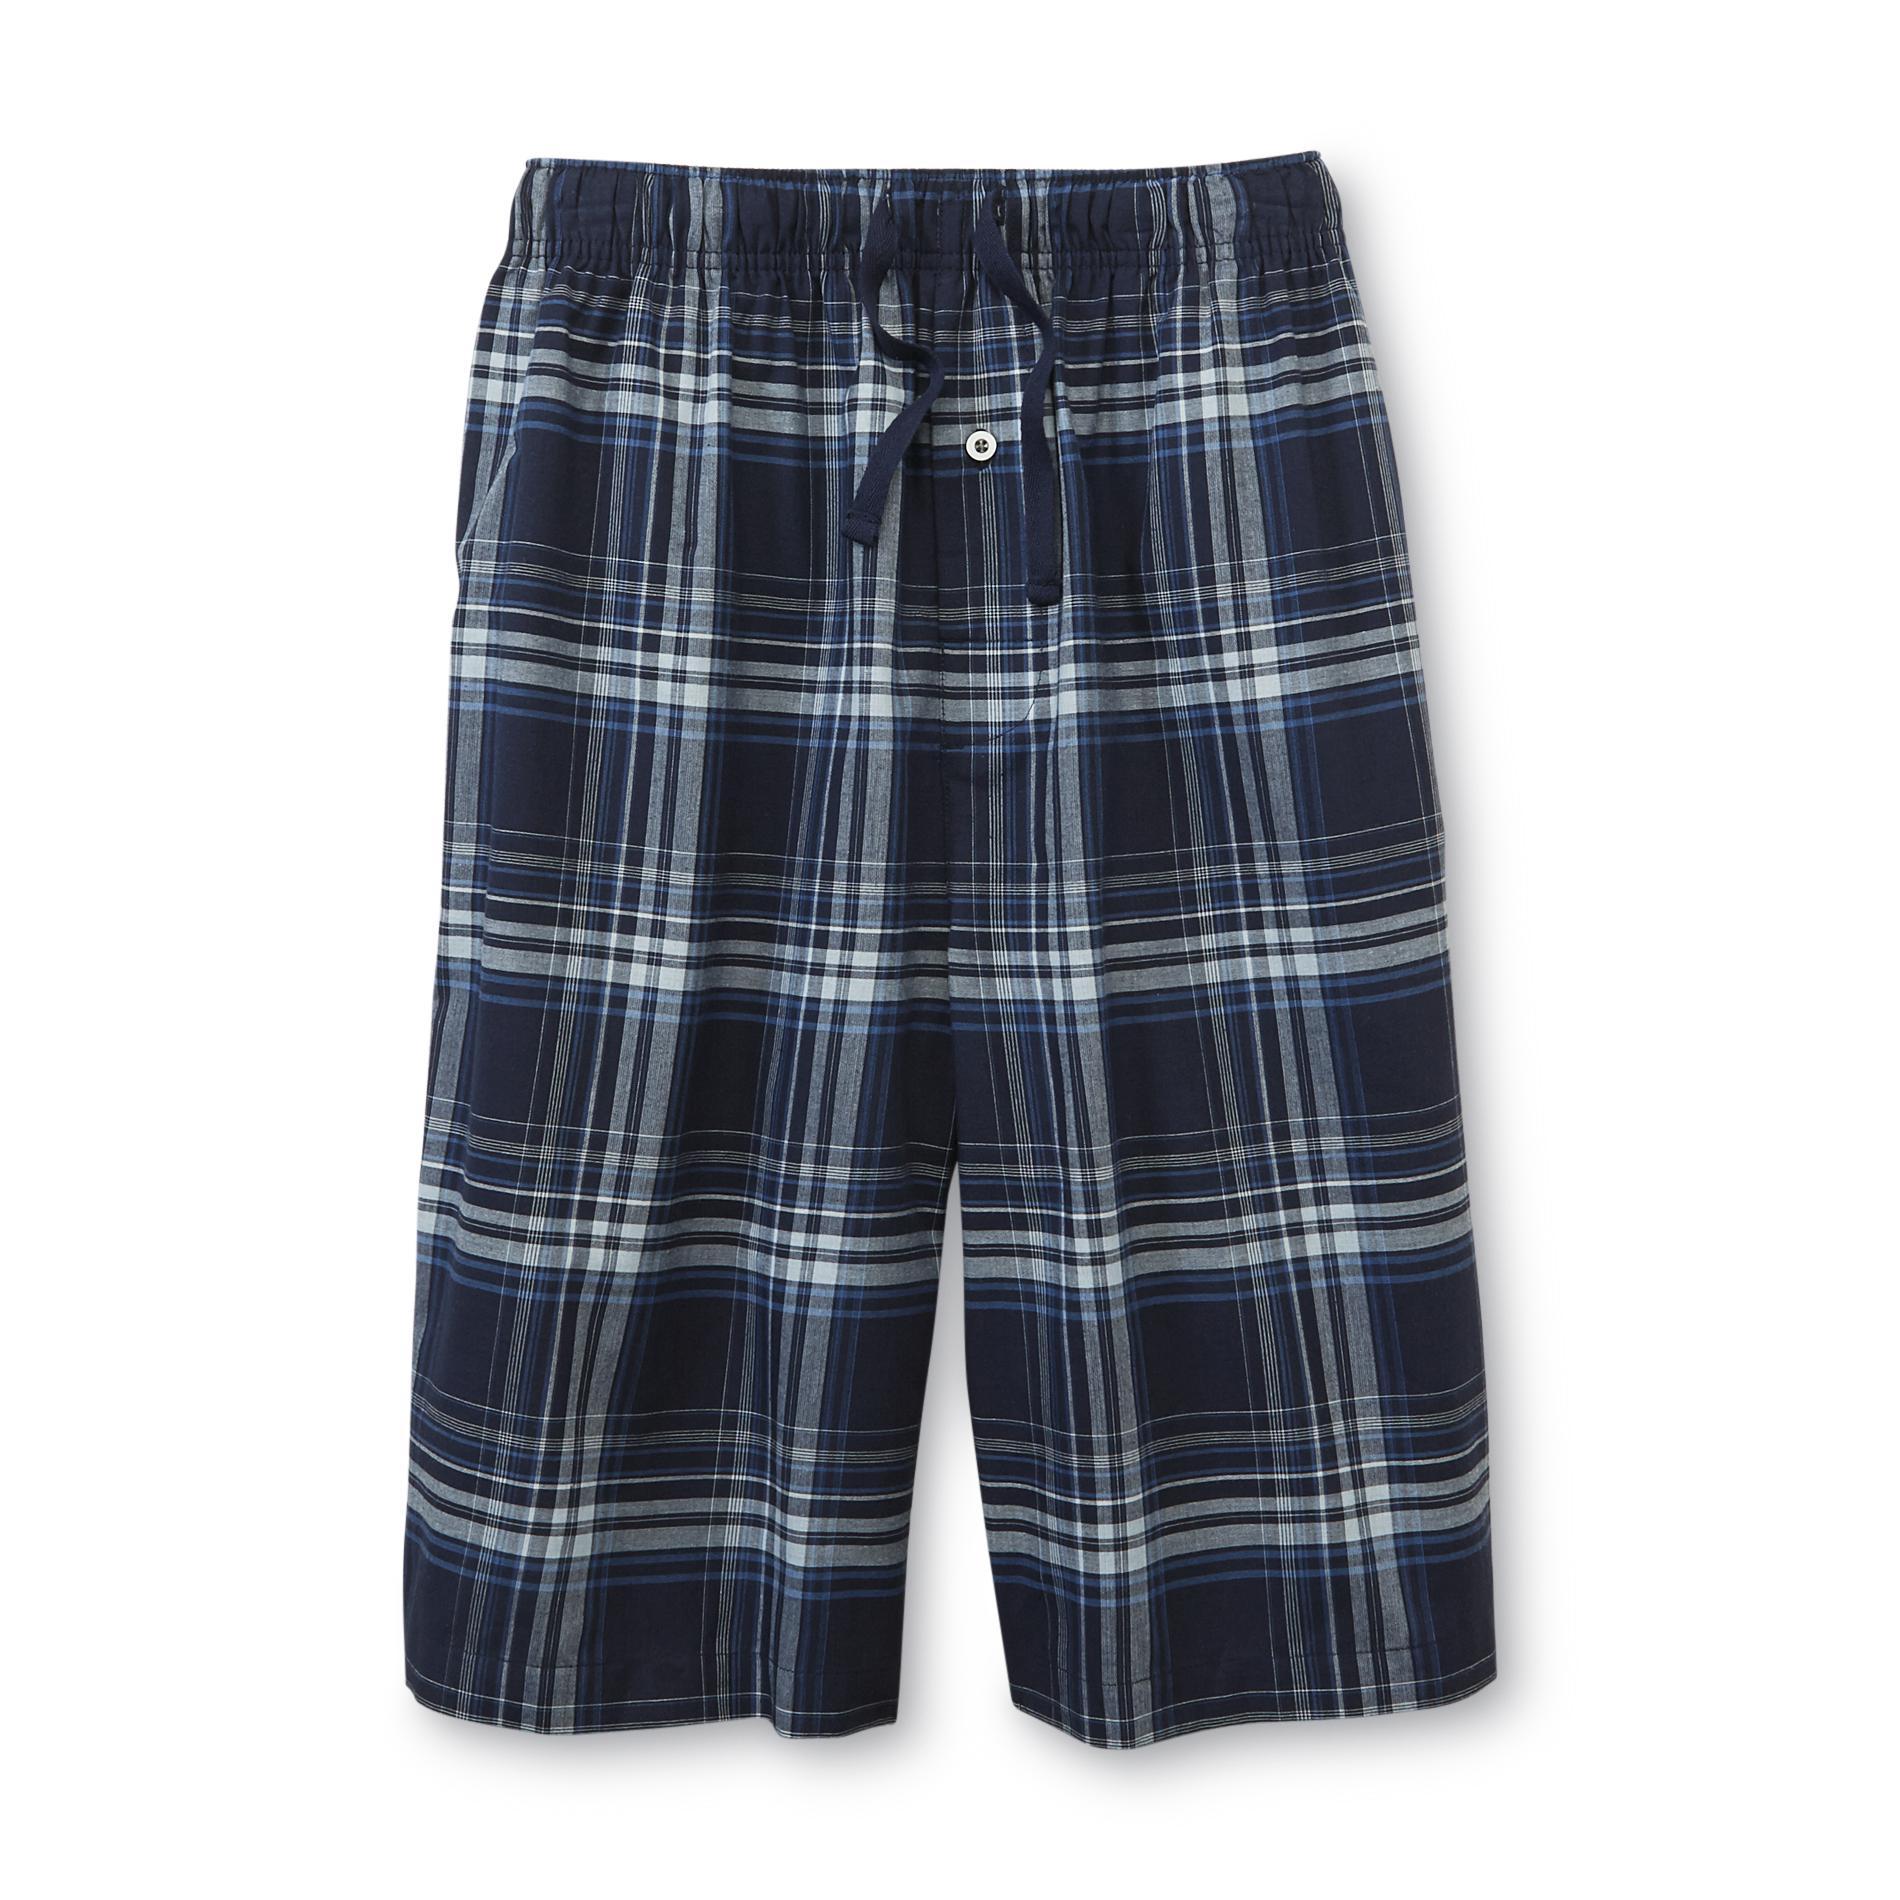 Basic Editions Men's Big & Tall Poplin Pajama Shorts - Plaid